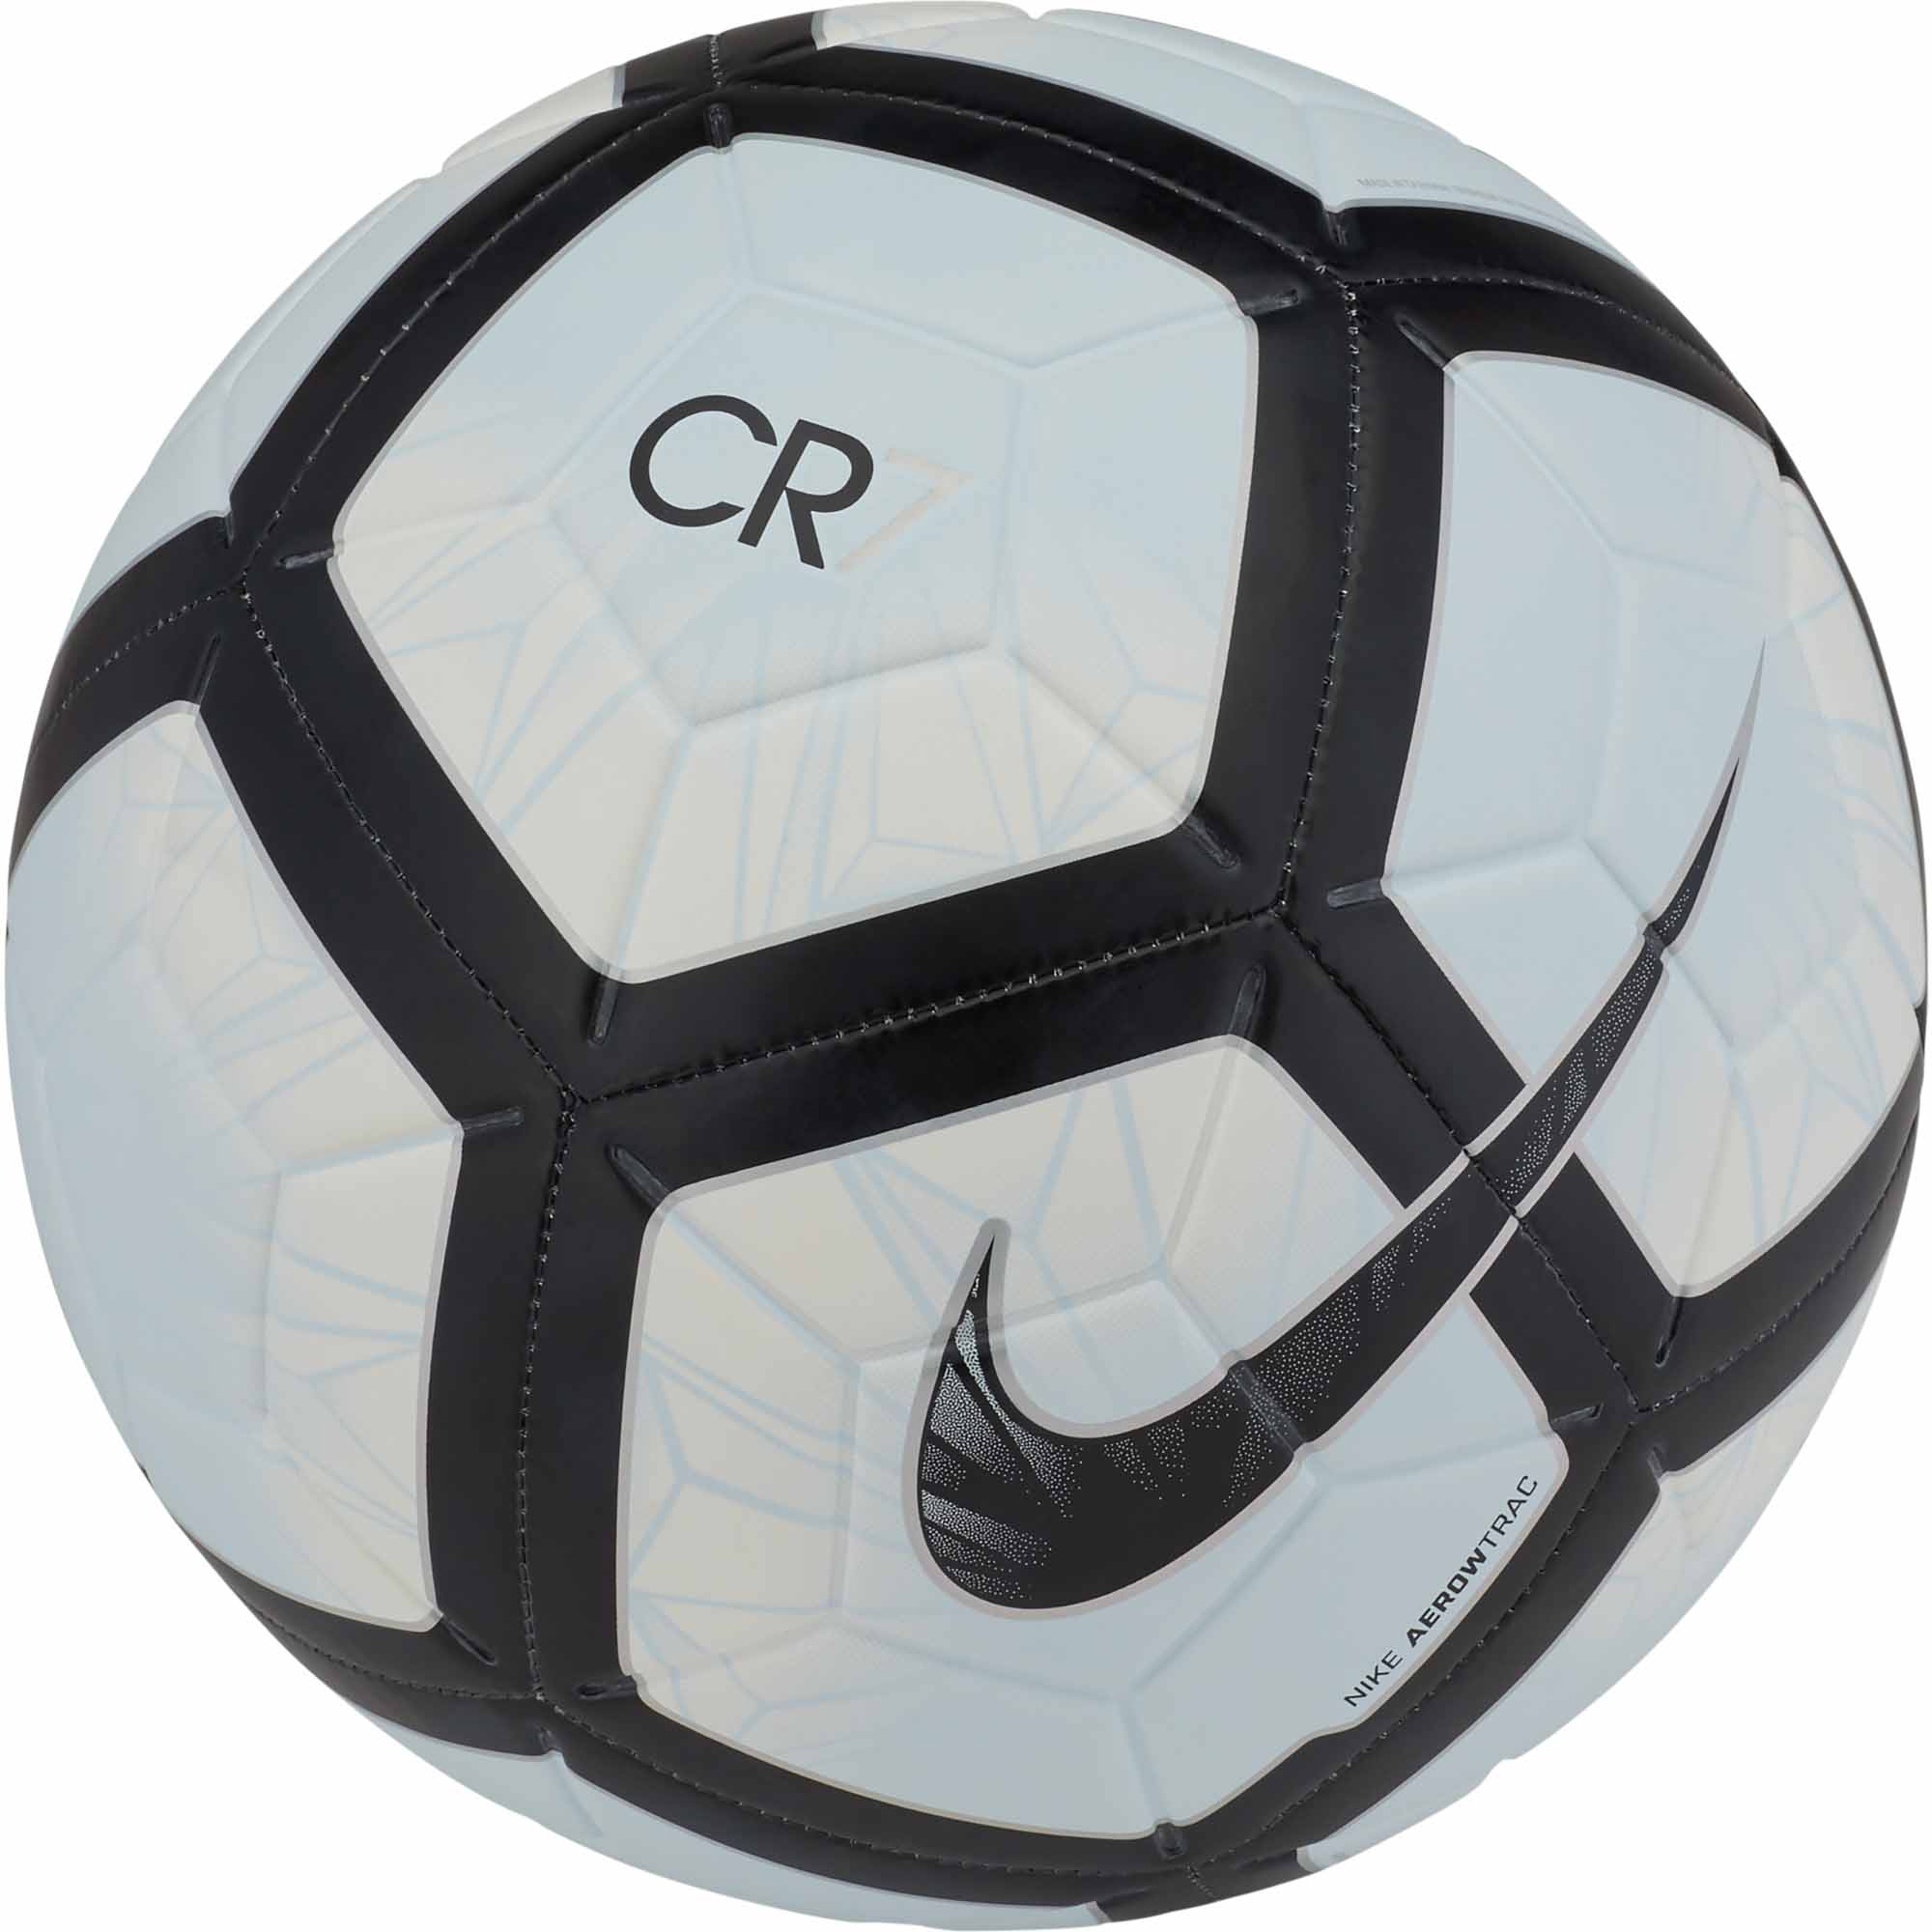 Nike CR7 Prestige Soccer Ball - White \u0026 Black